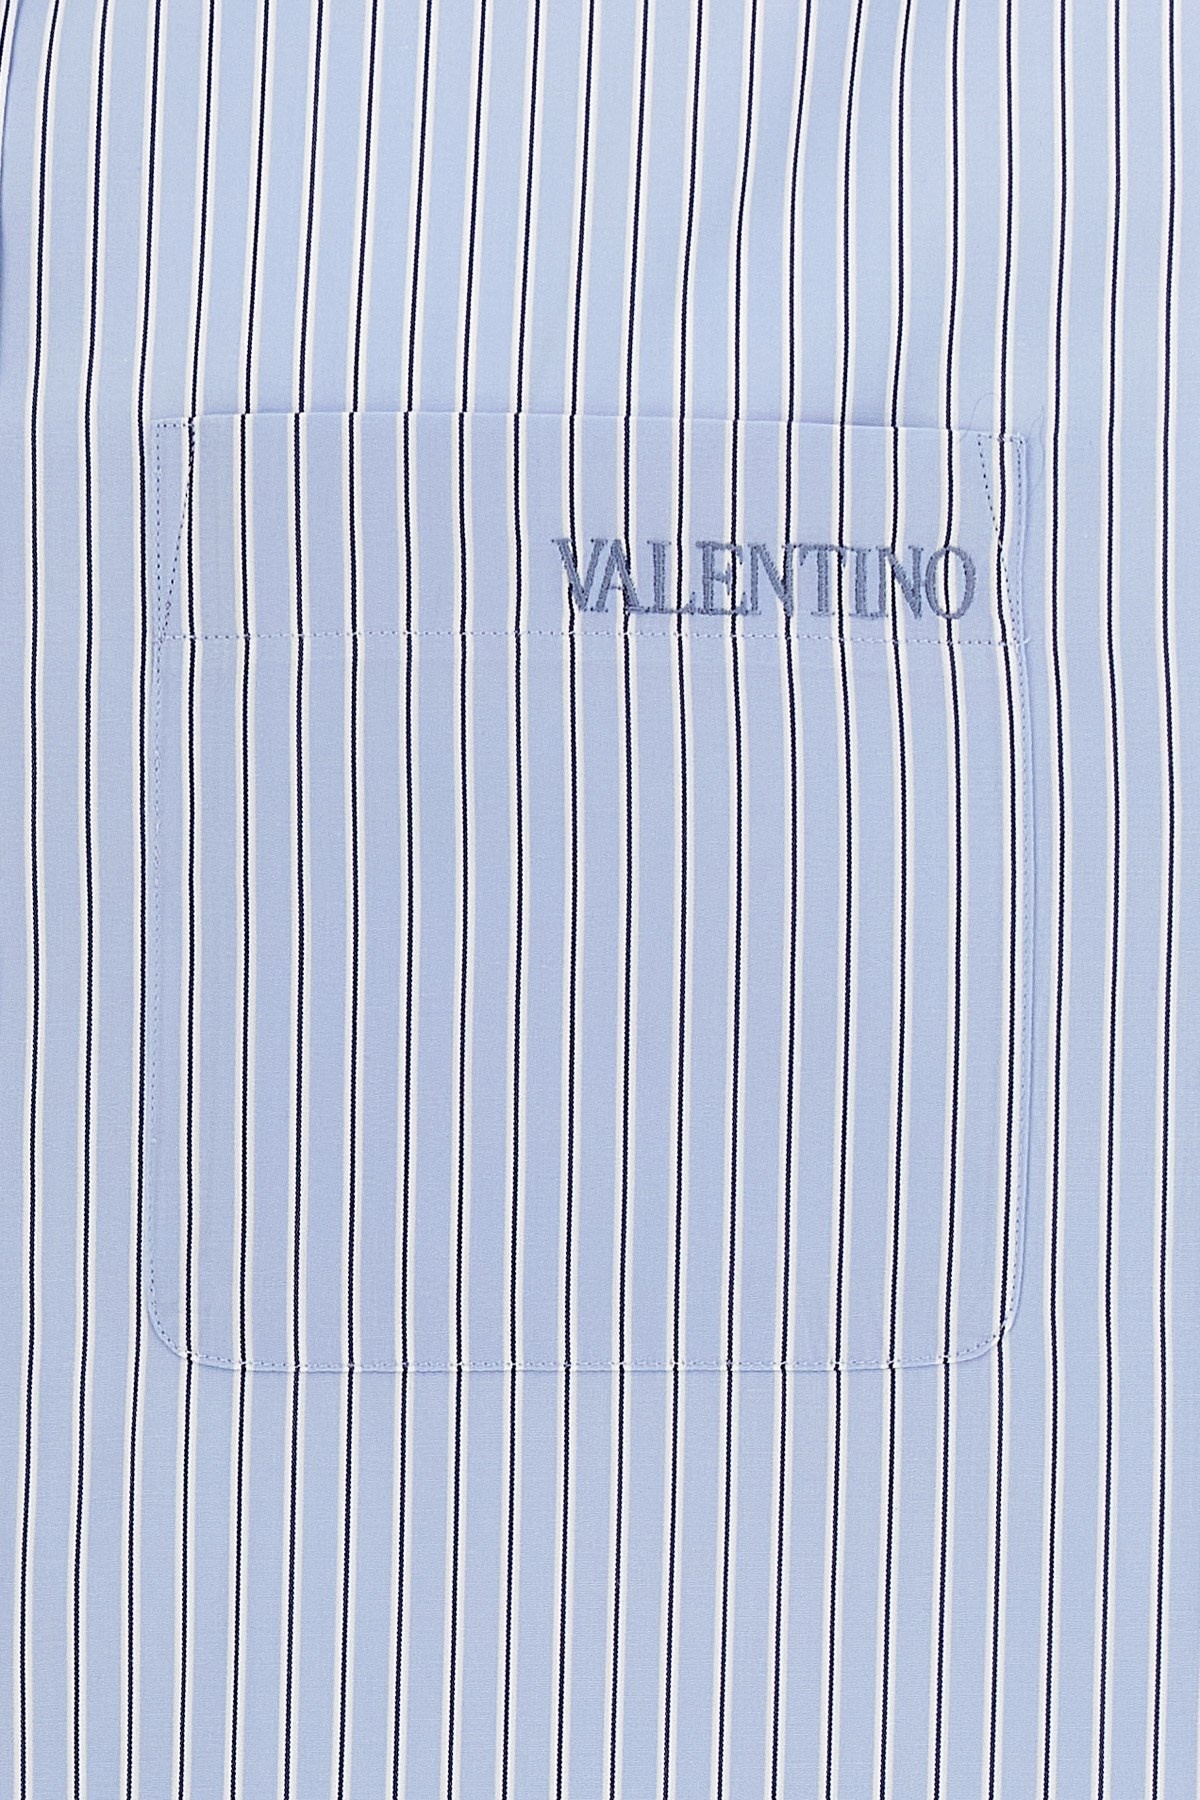 Valentino striped shirt - 6